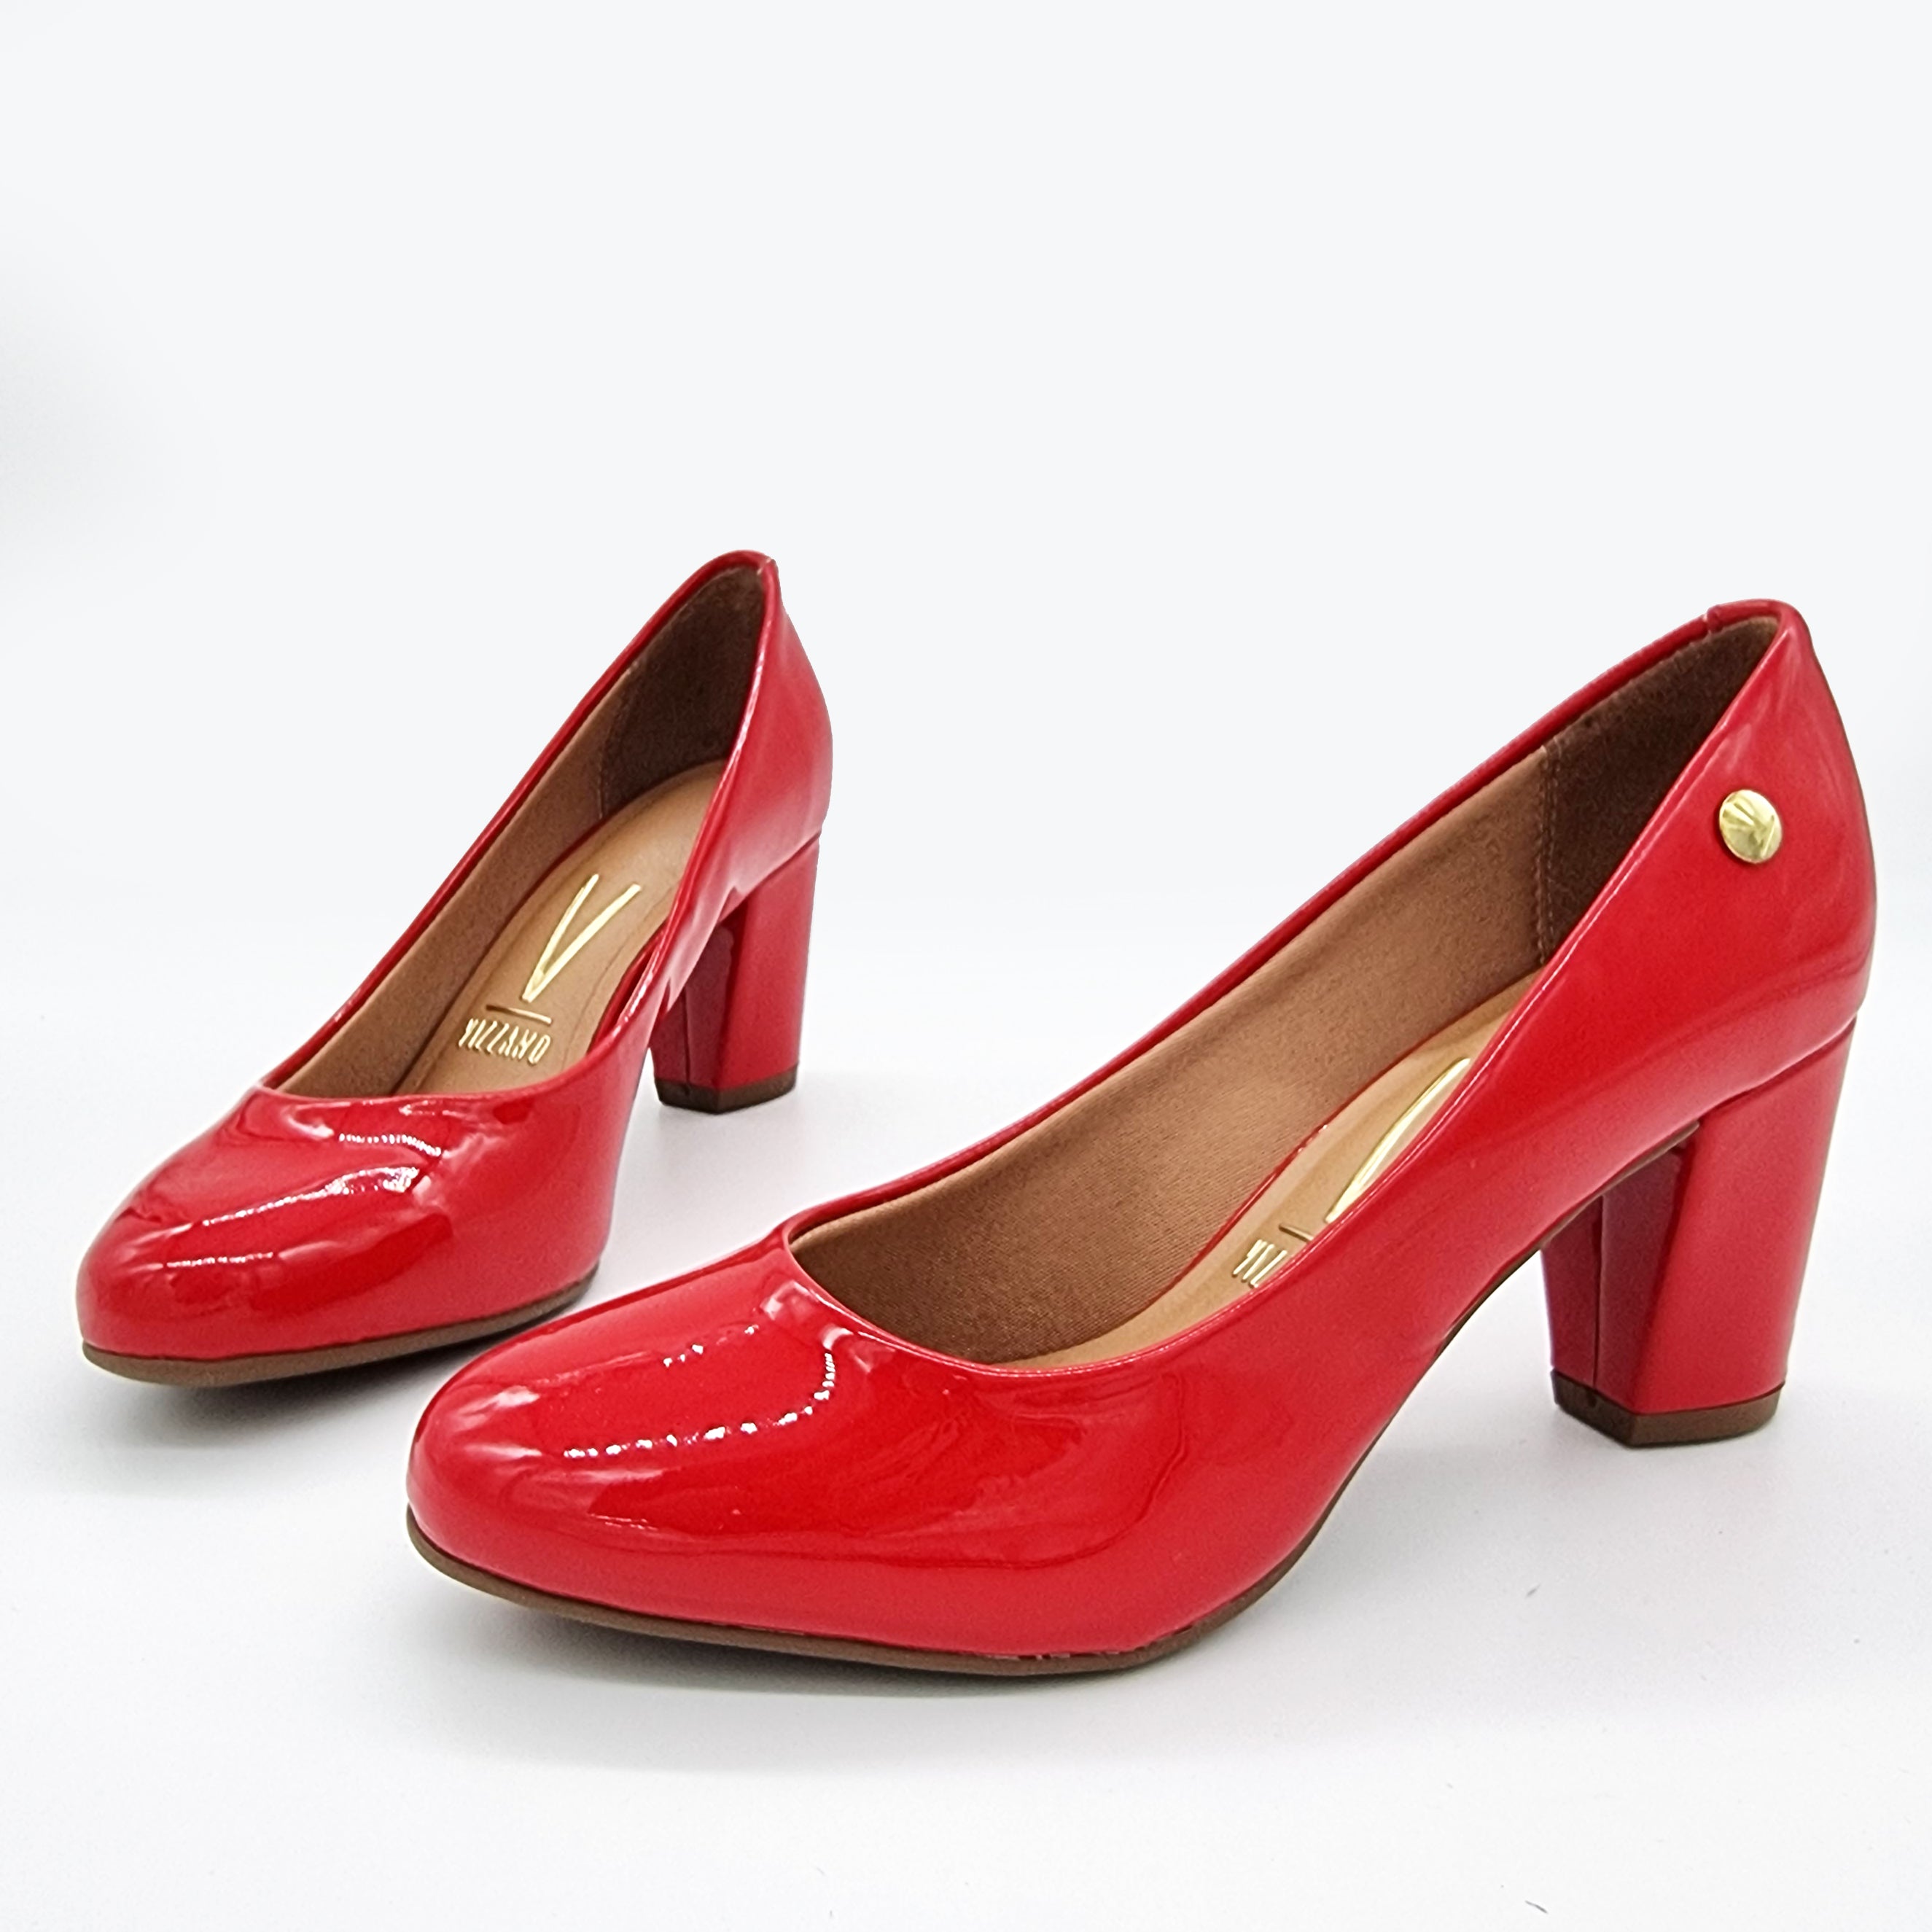 Vizzano 1259-200 Block Heel Round Toe Pump in Red Patent